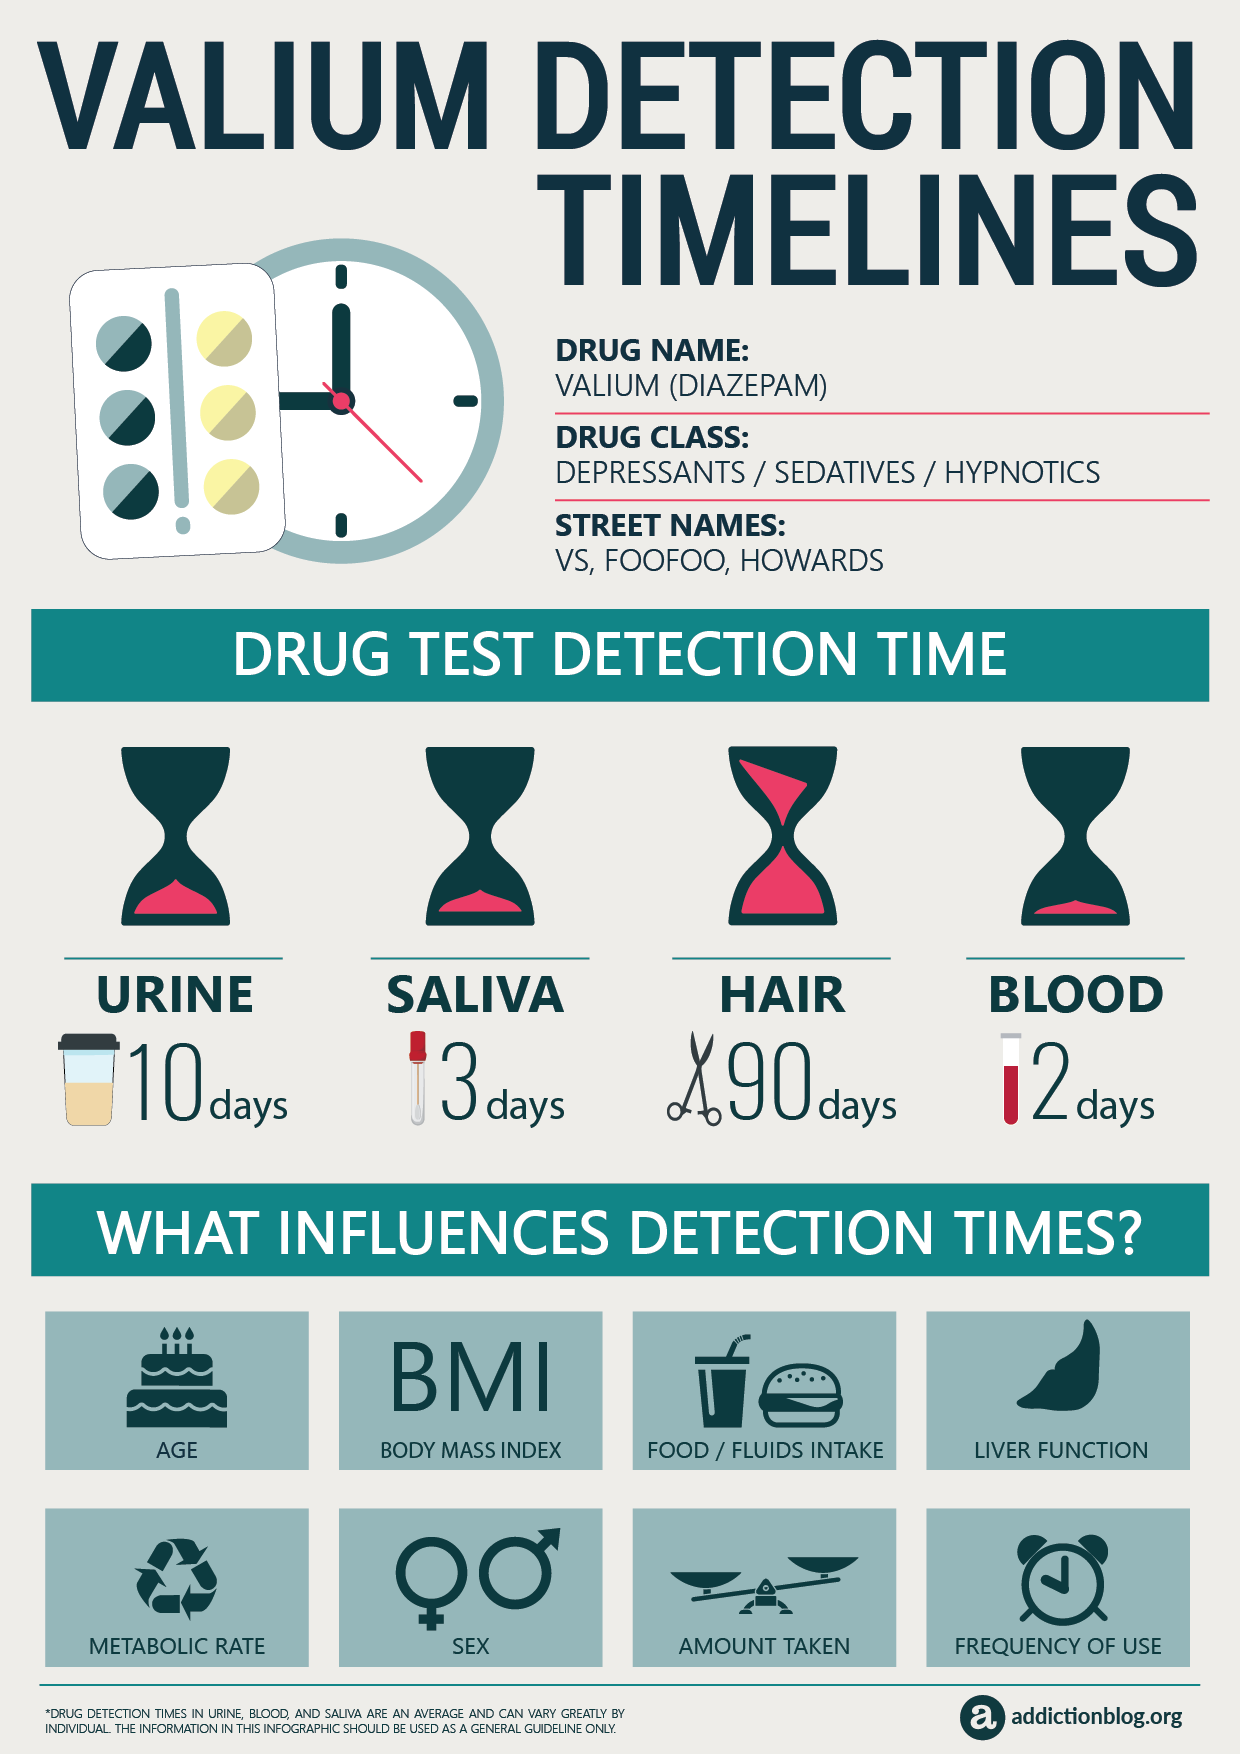 Valium Detection Timelines (INFOGRAPHIC)